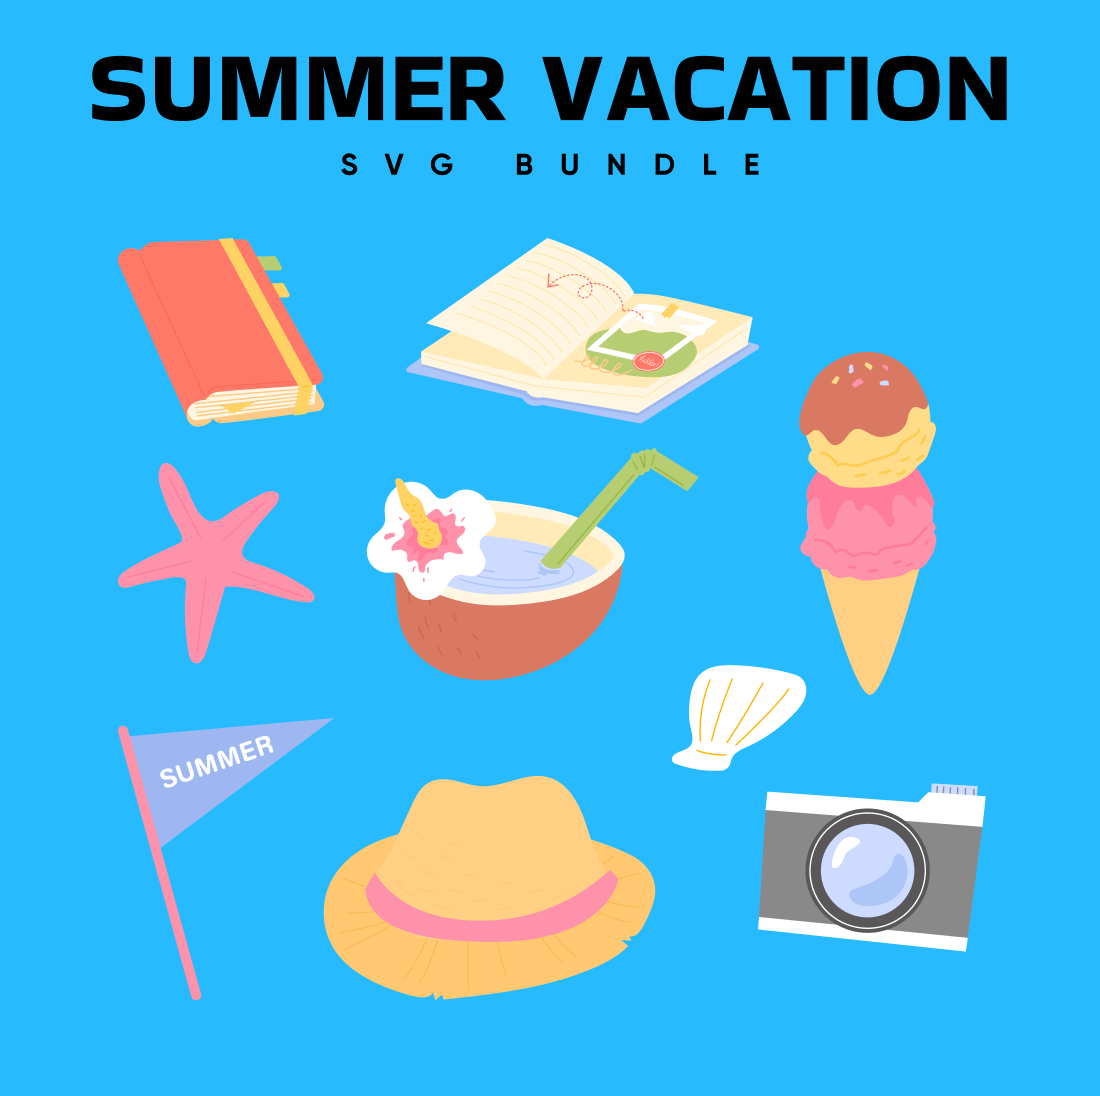 Summer vacation SVG Bundle.